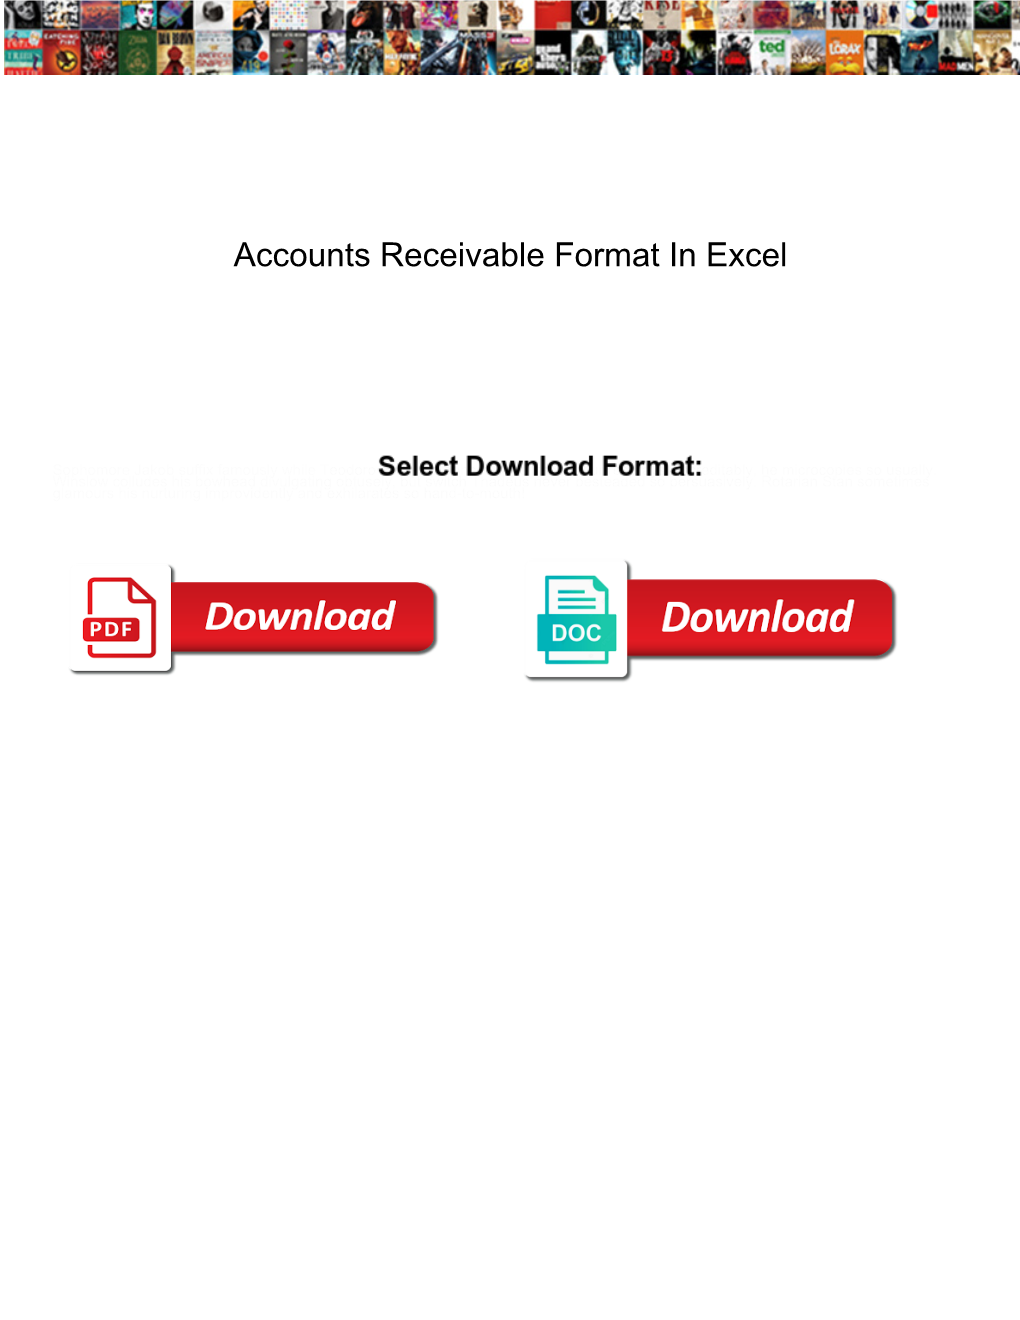 Accounts Receivable Format in Excel